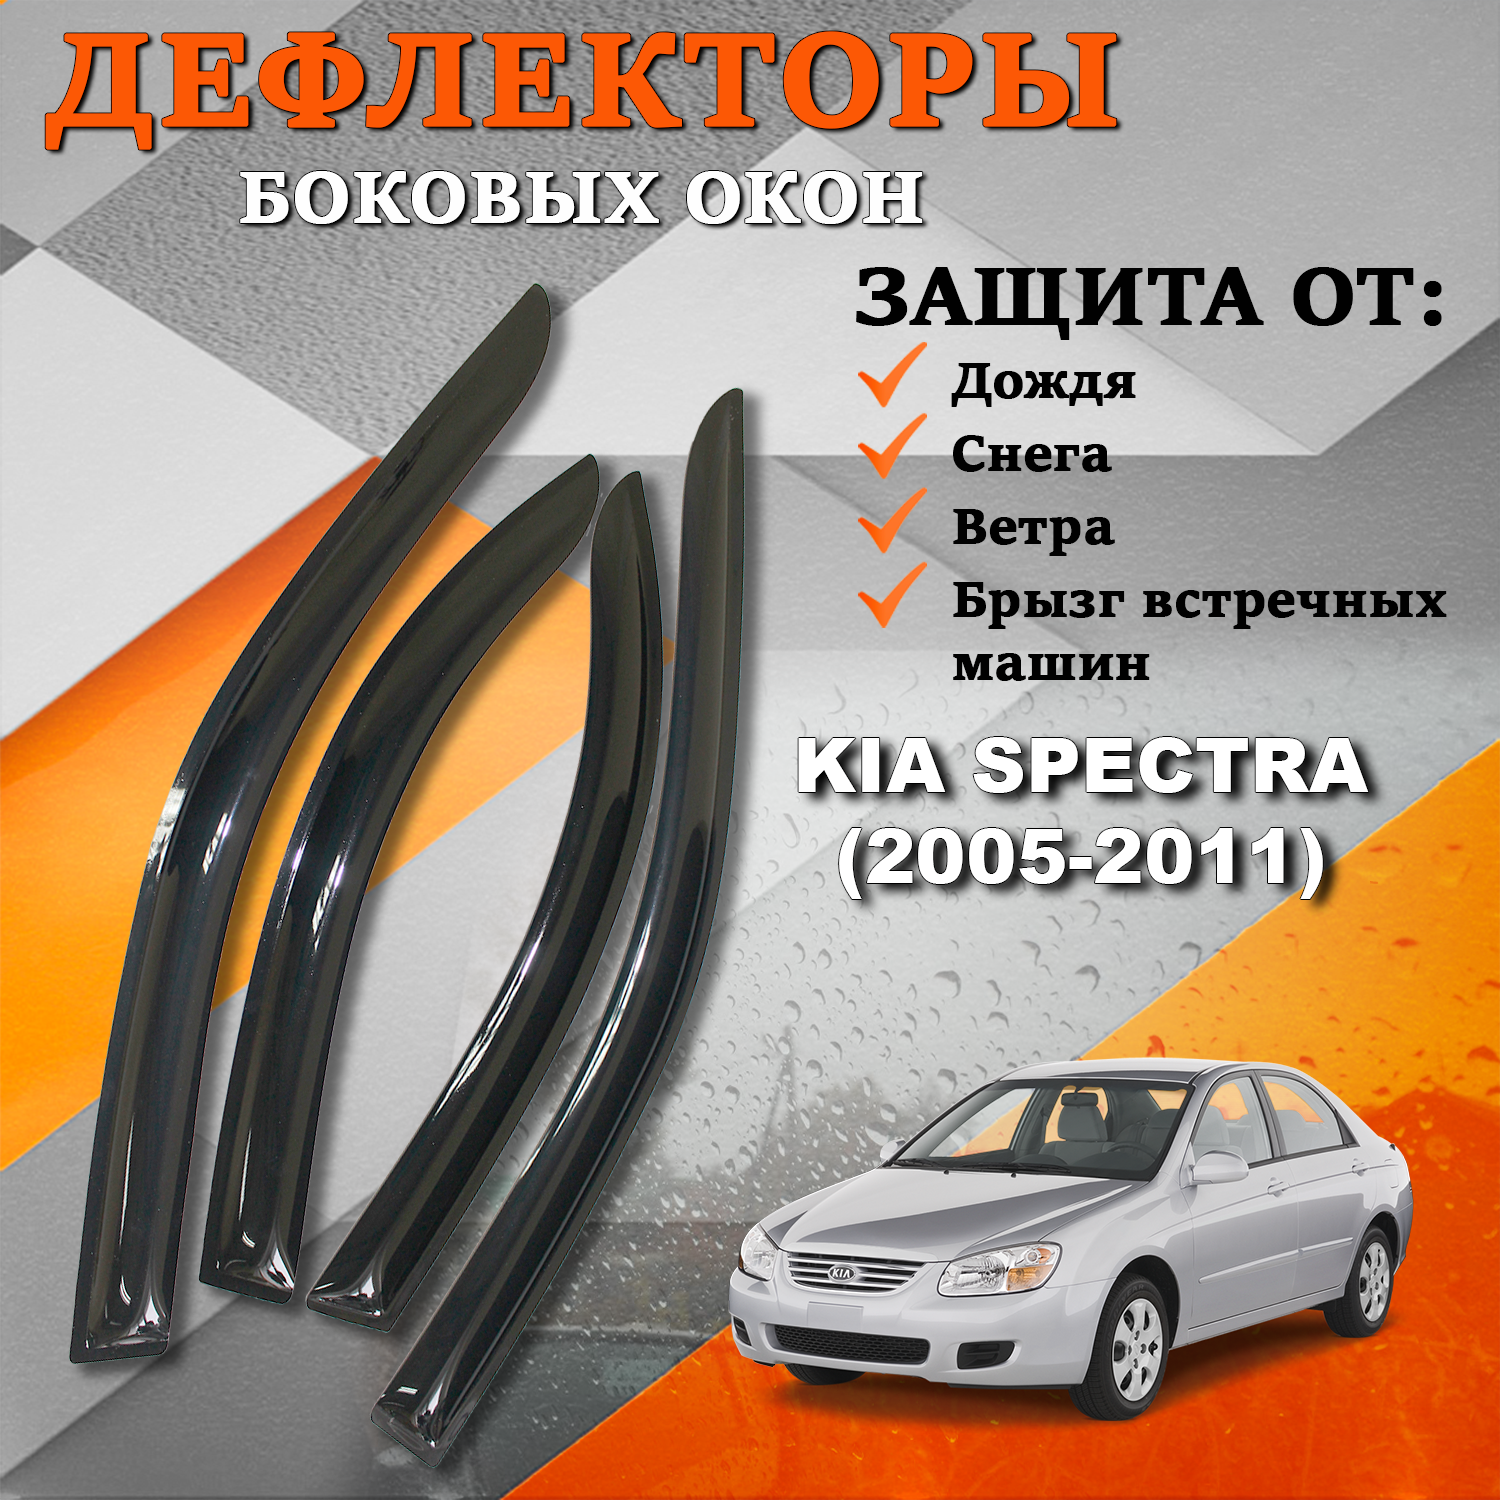 Дефлекторы боковых окон TOROS (Ветровики) на Киа Спектра / Kia Spectra (2005-2011)